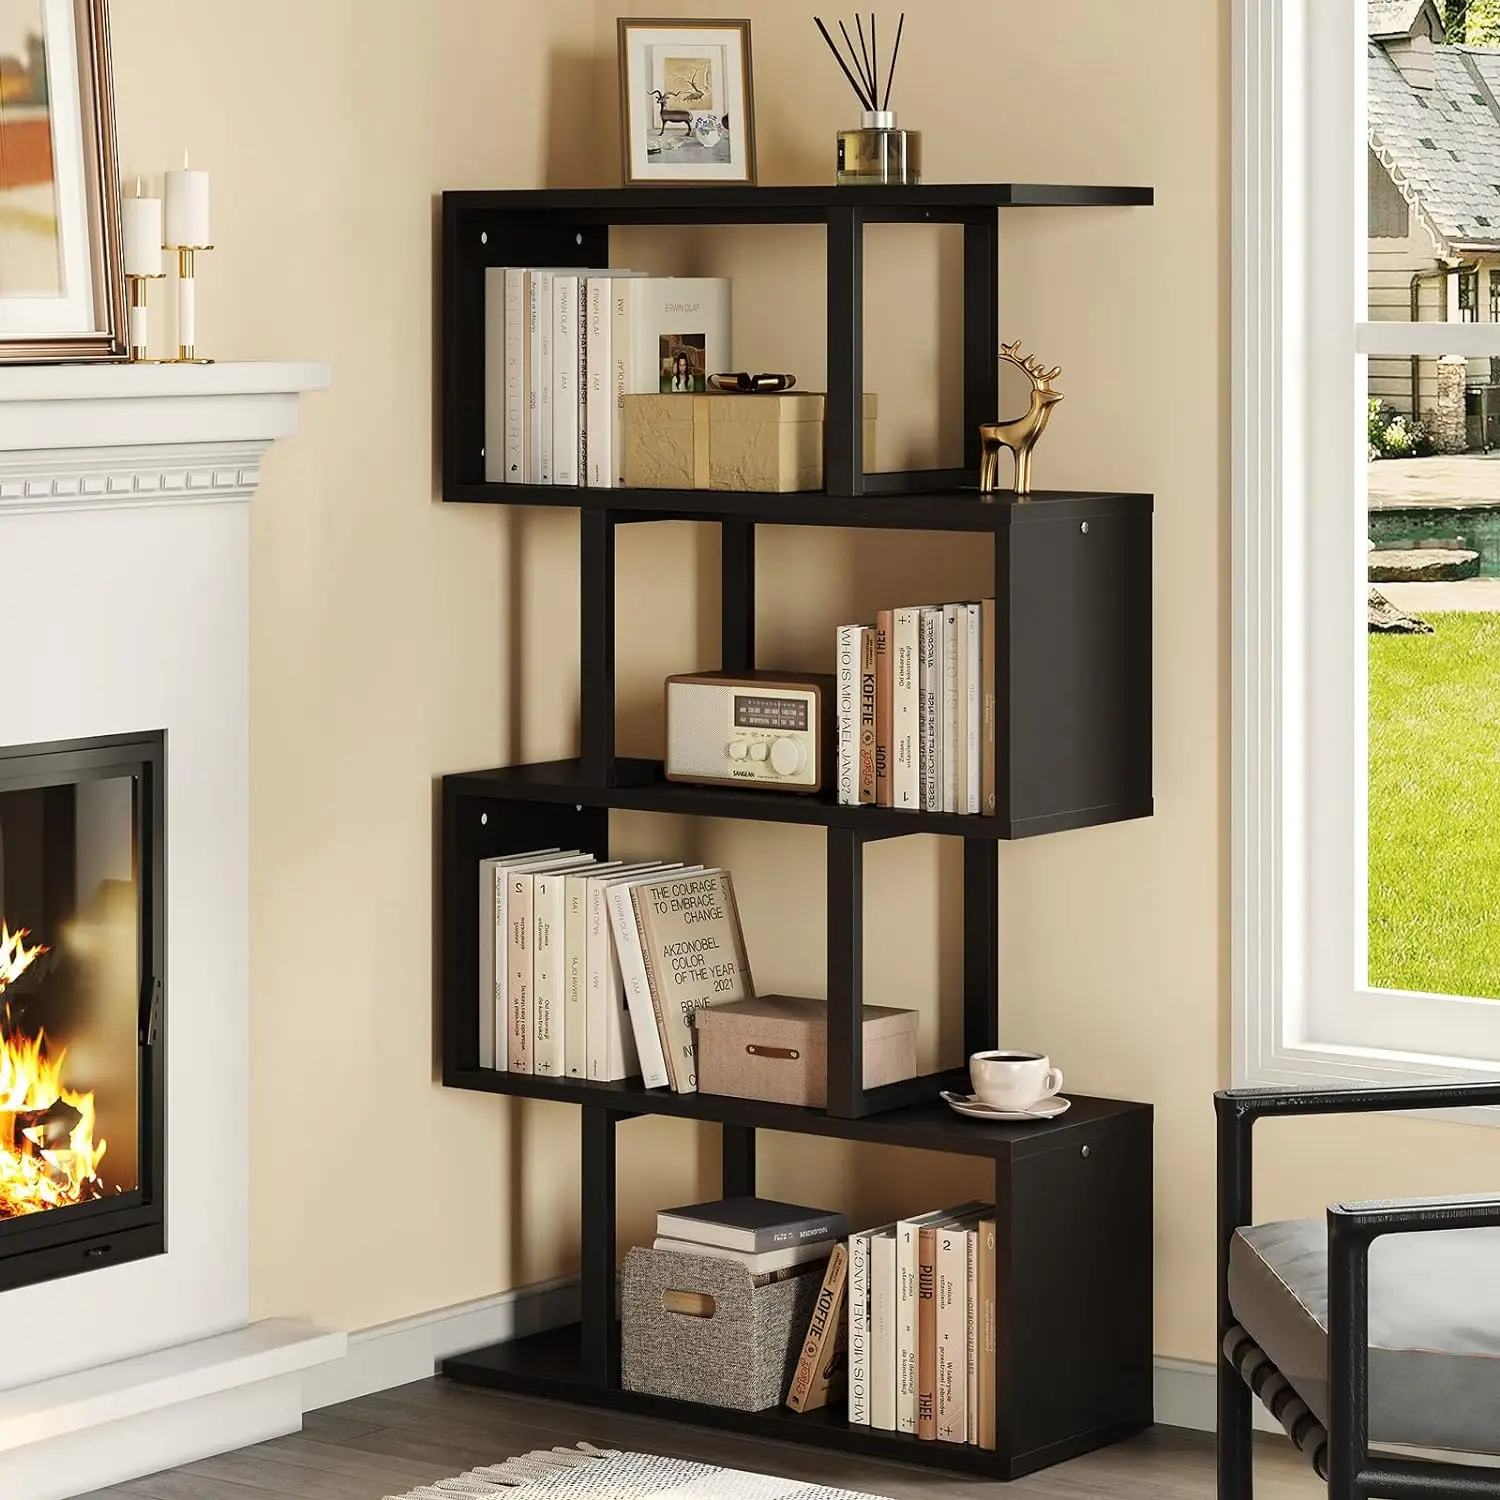 

5-Tier Bookshelf, S-Shaped Z-Shelf Bookshelves and Bookcase, Modern Freestanding Multifunctional Decorative Storage